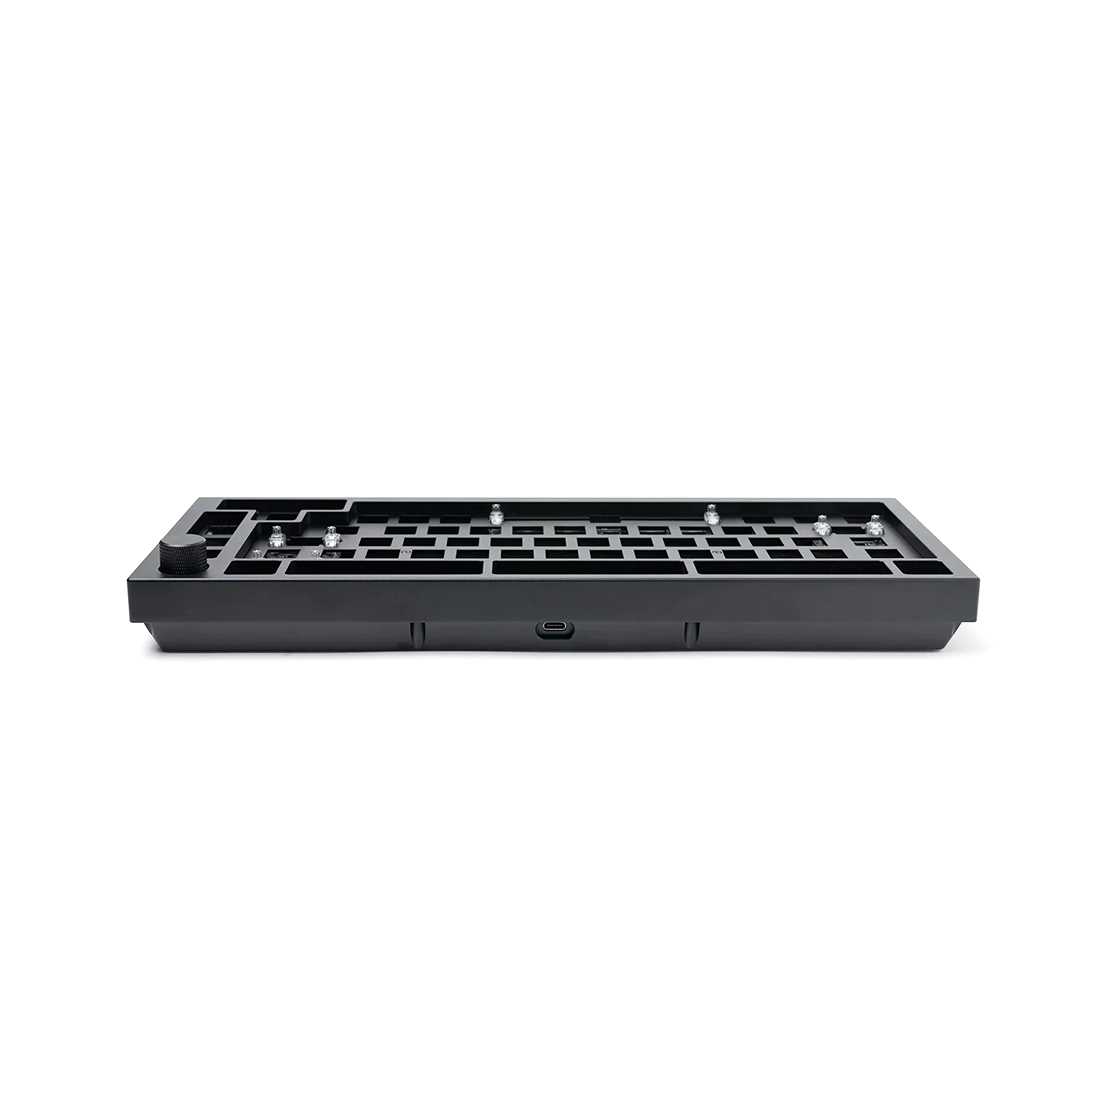 Основа клавиатуры Glorious GMMK Pro Barebones Black (GLO-GMMK-P75-RGB-B)